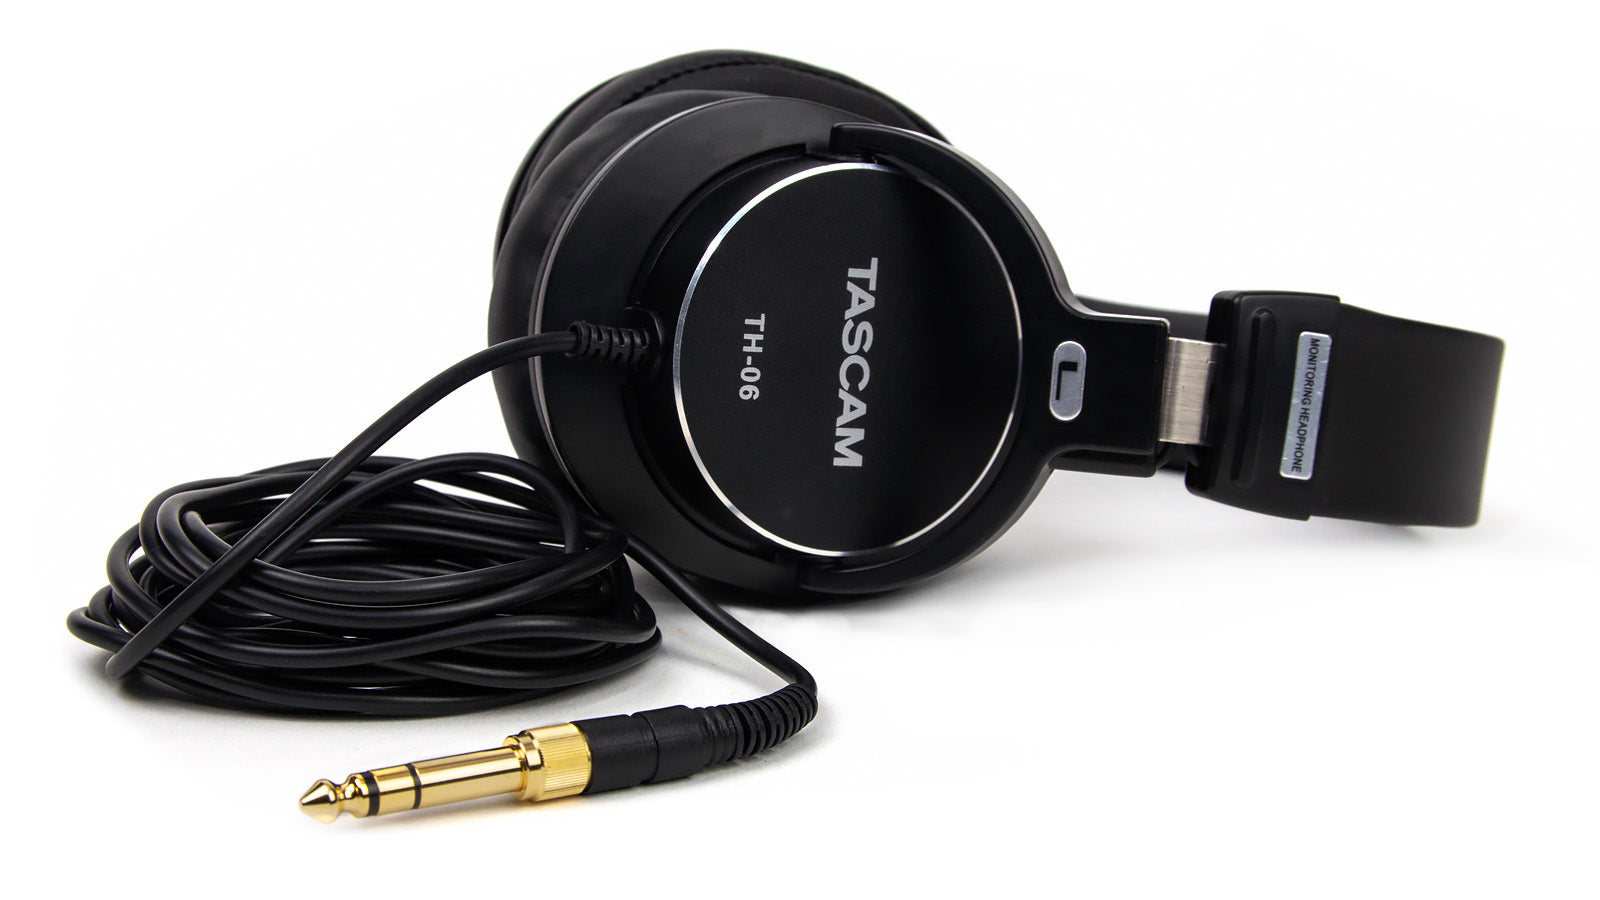 Tascam TH-06 - Monitoring Headphones - 305broadcast